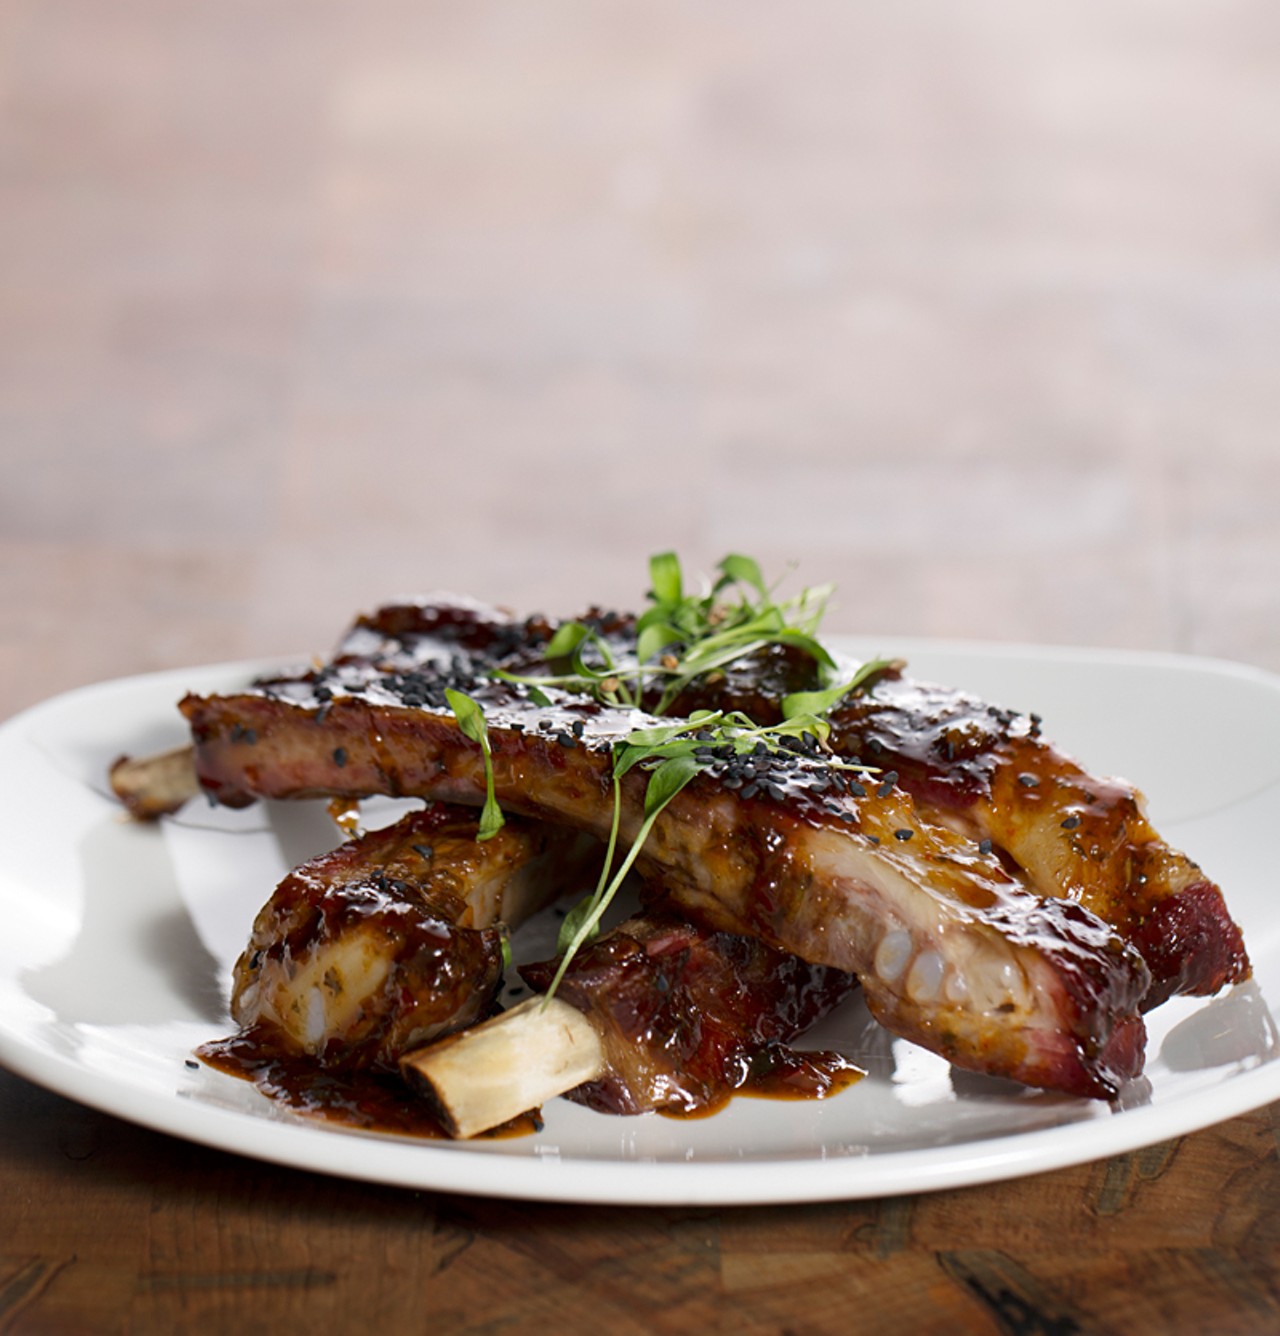 Raincrow Ranch smoked pork ribs with an Asian barbecue glaze.